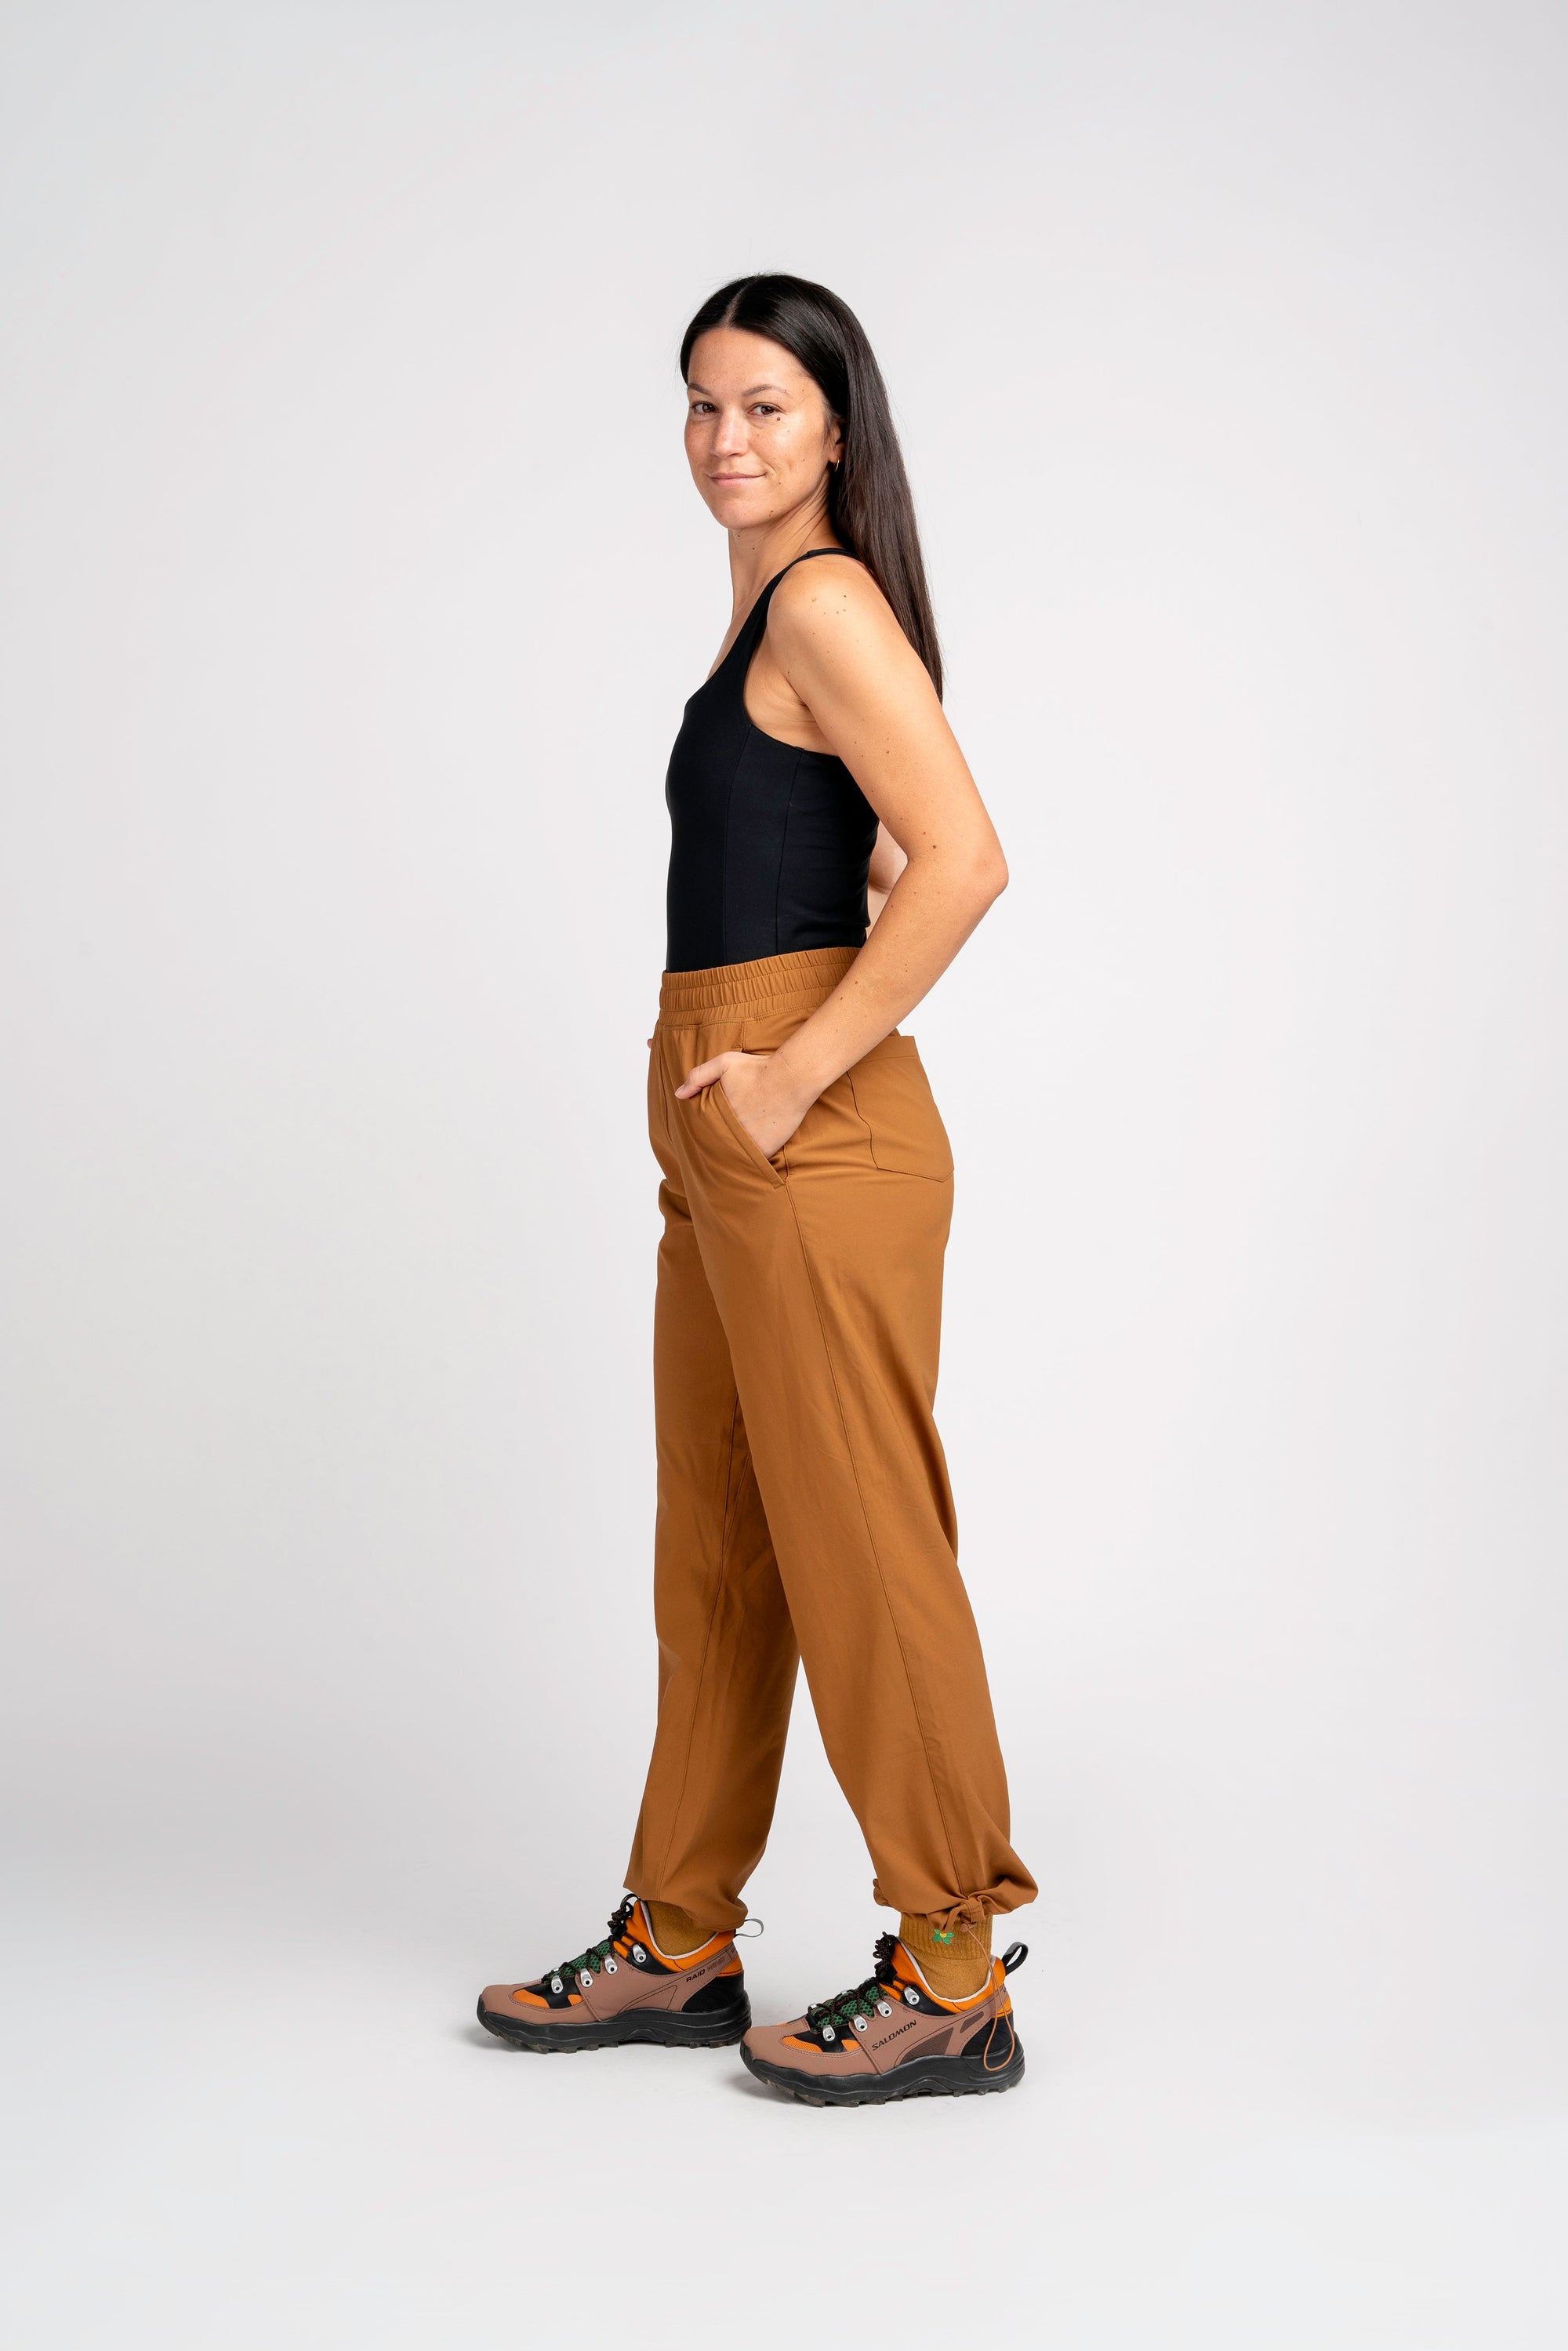 Women's XL activewear pants by Tangerine XL Blk/gray print